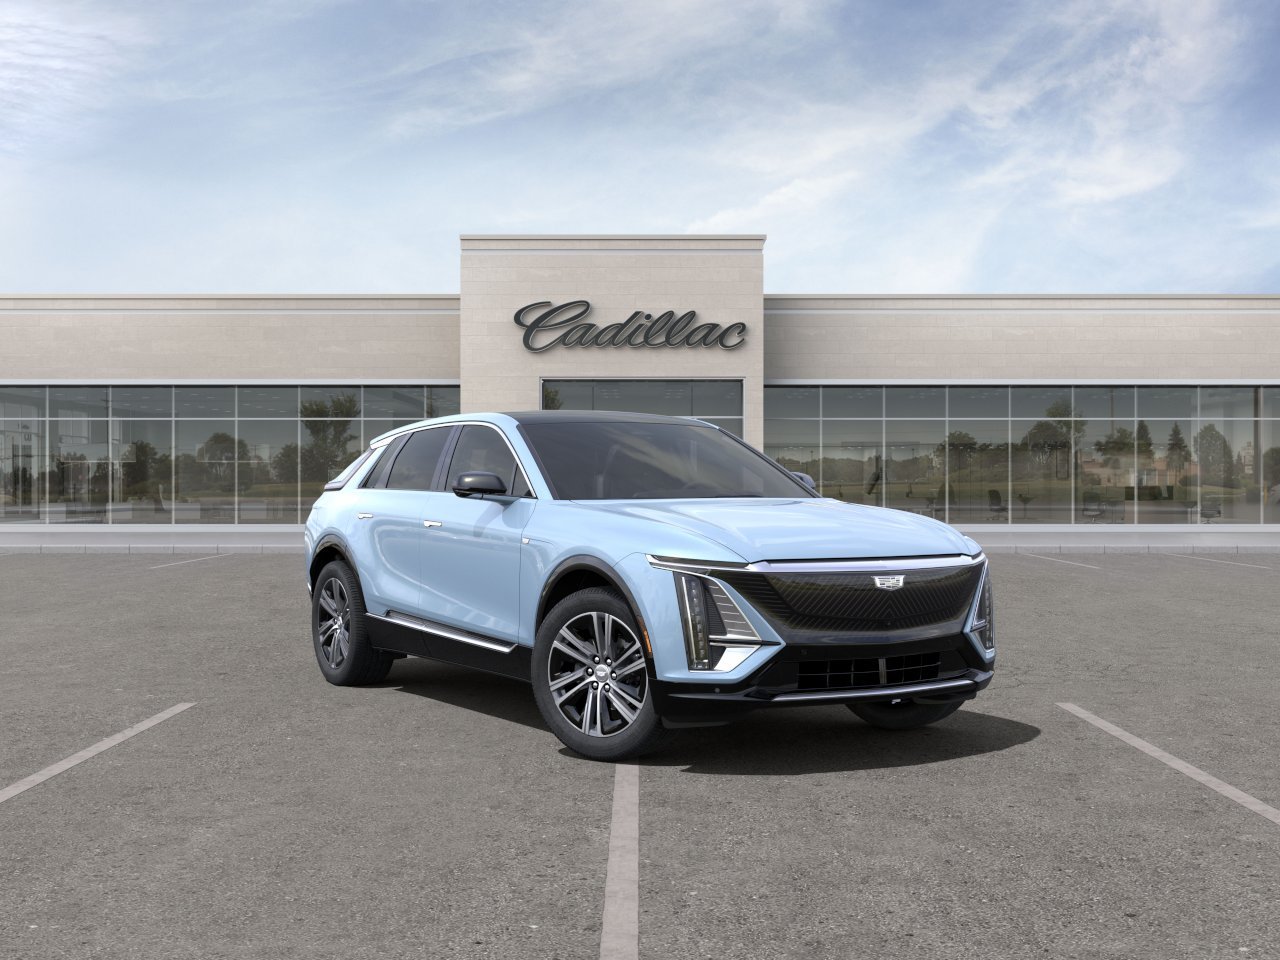 Cadillac Luxury Vehicles: Sedans, SUVs, & Electric